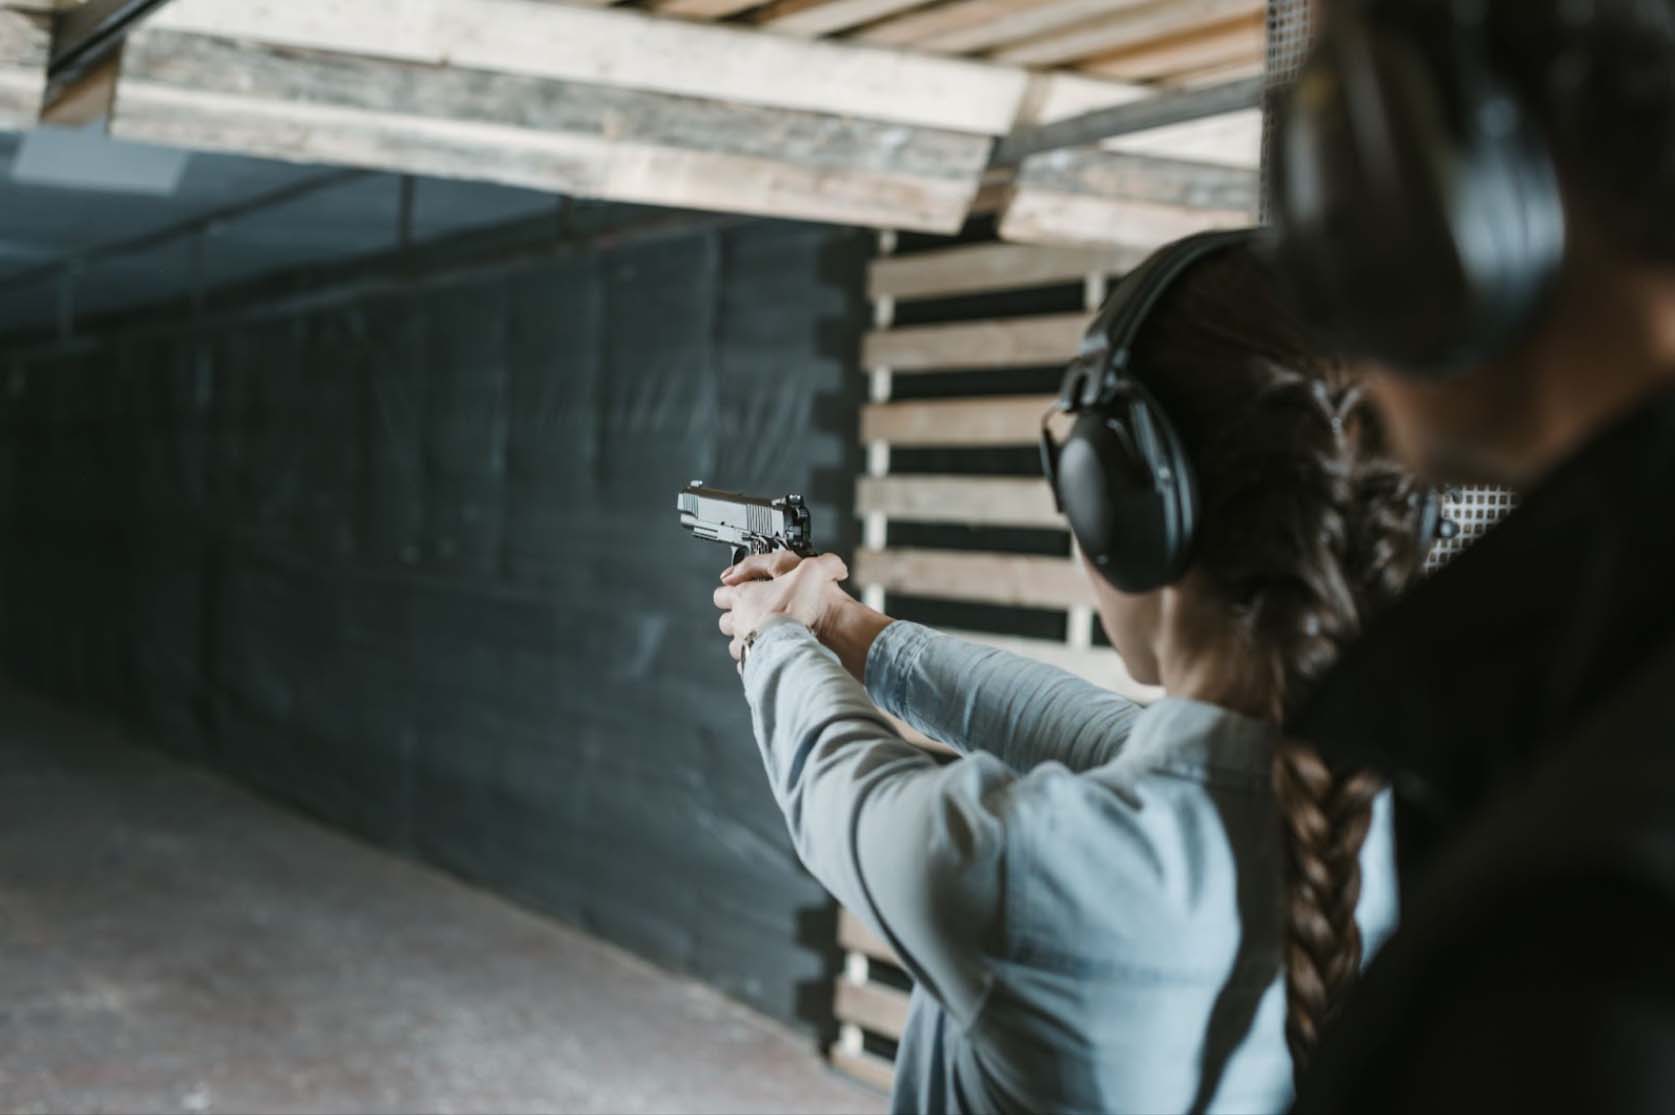 Woman training in a gun range.